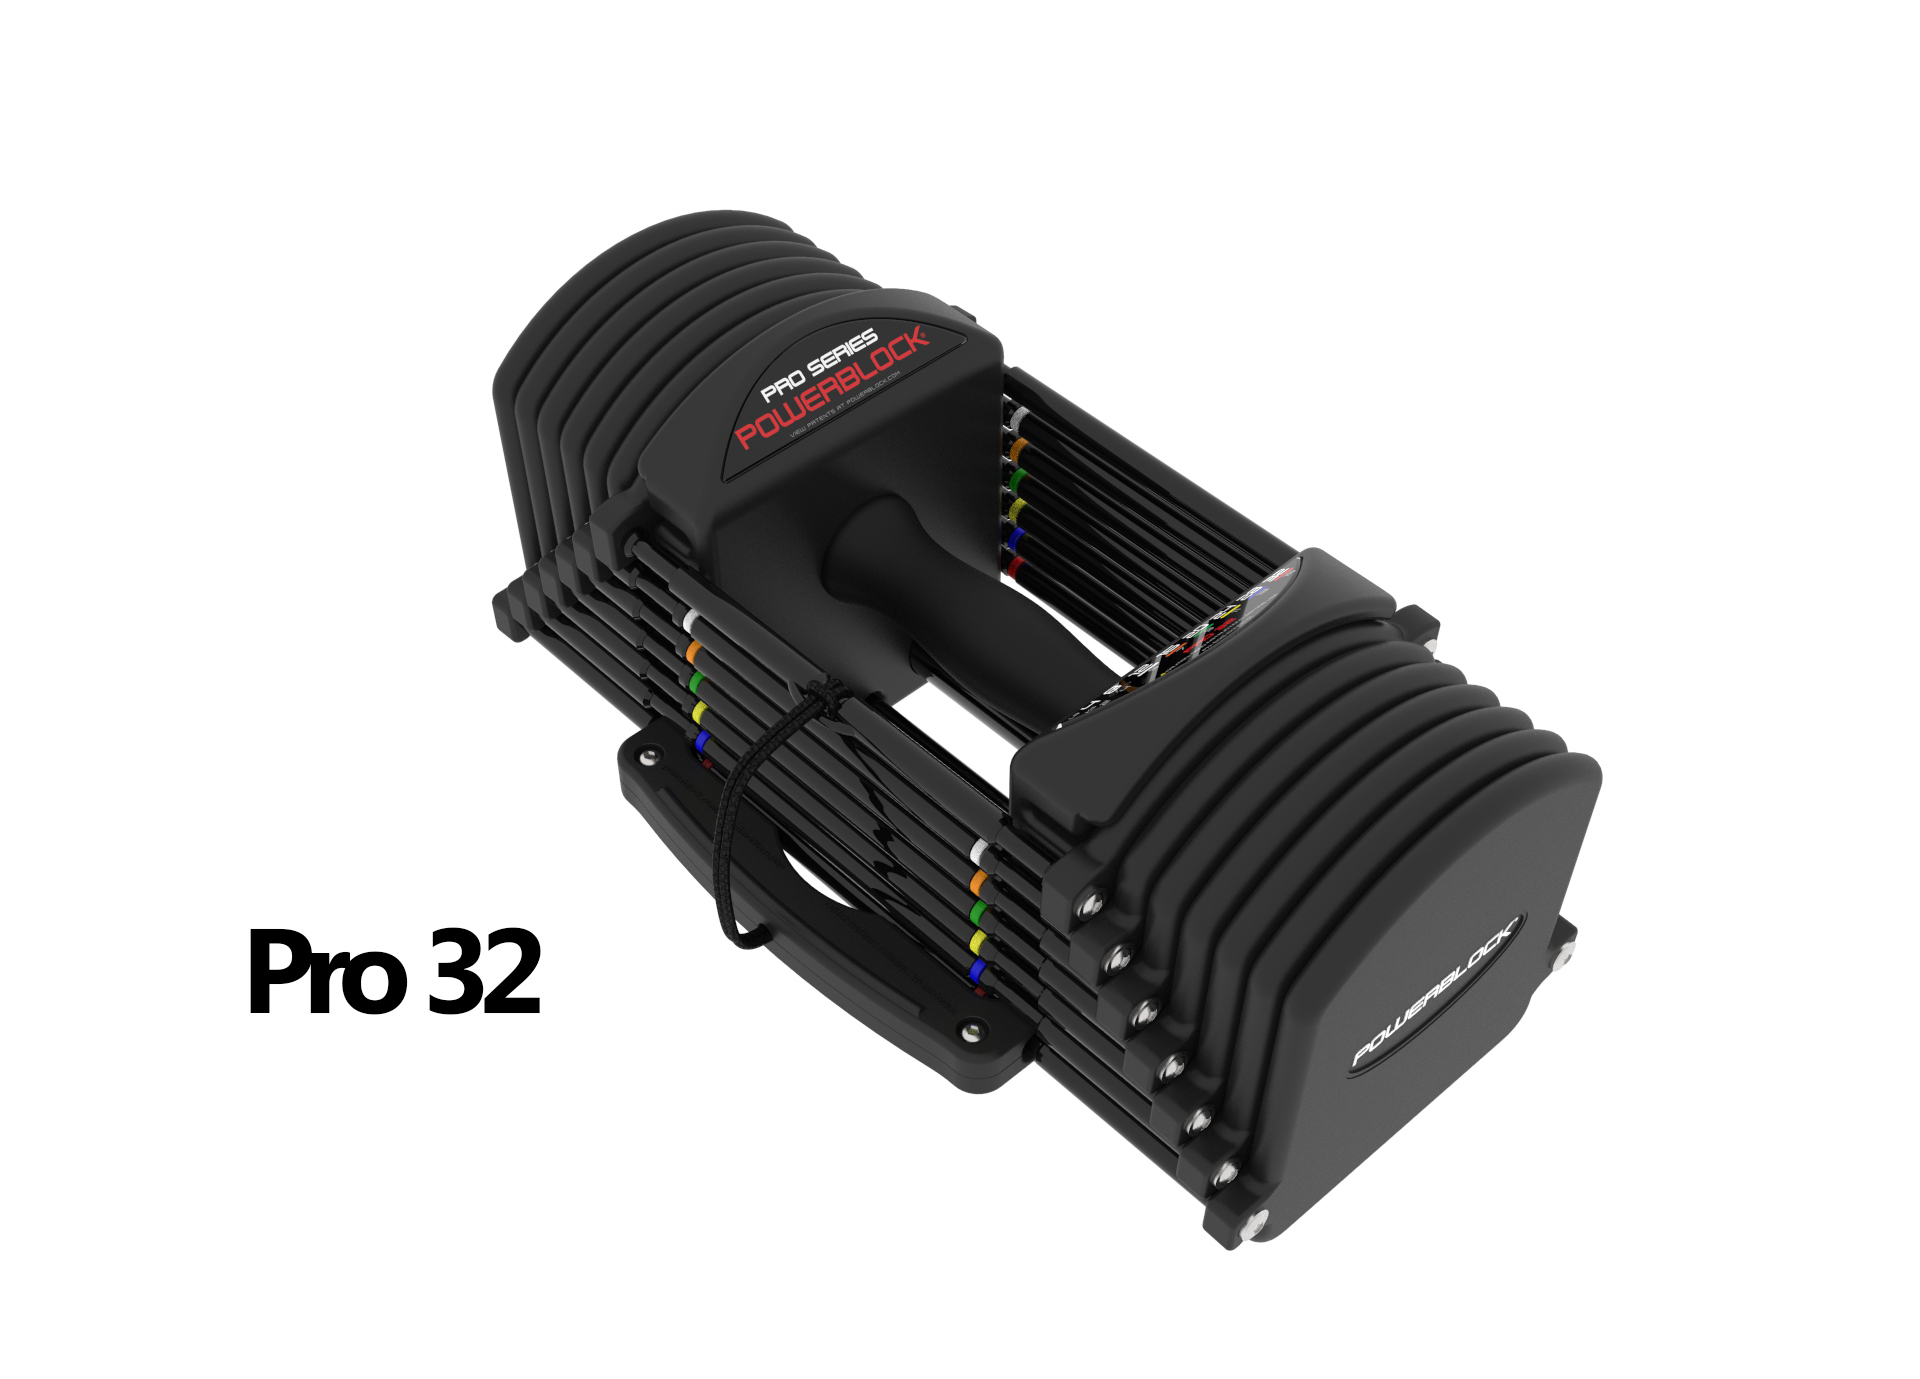 PowerBlock Pro 32 (SALE!)